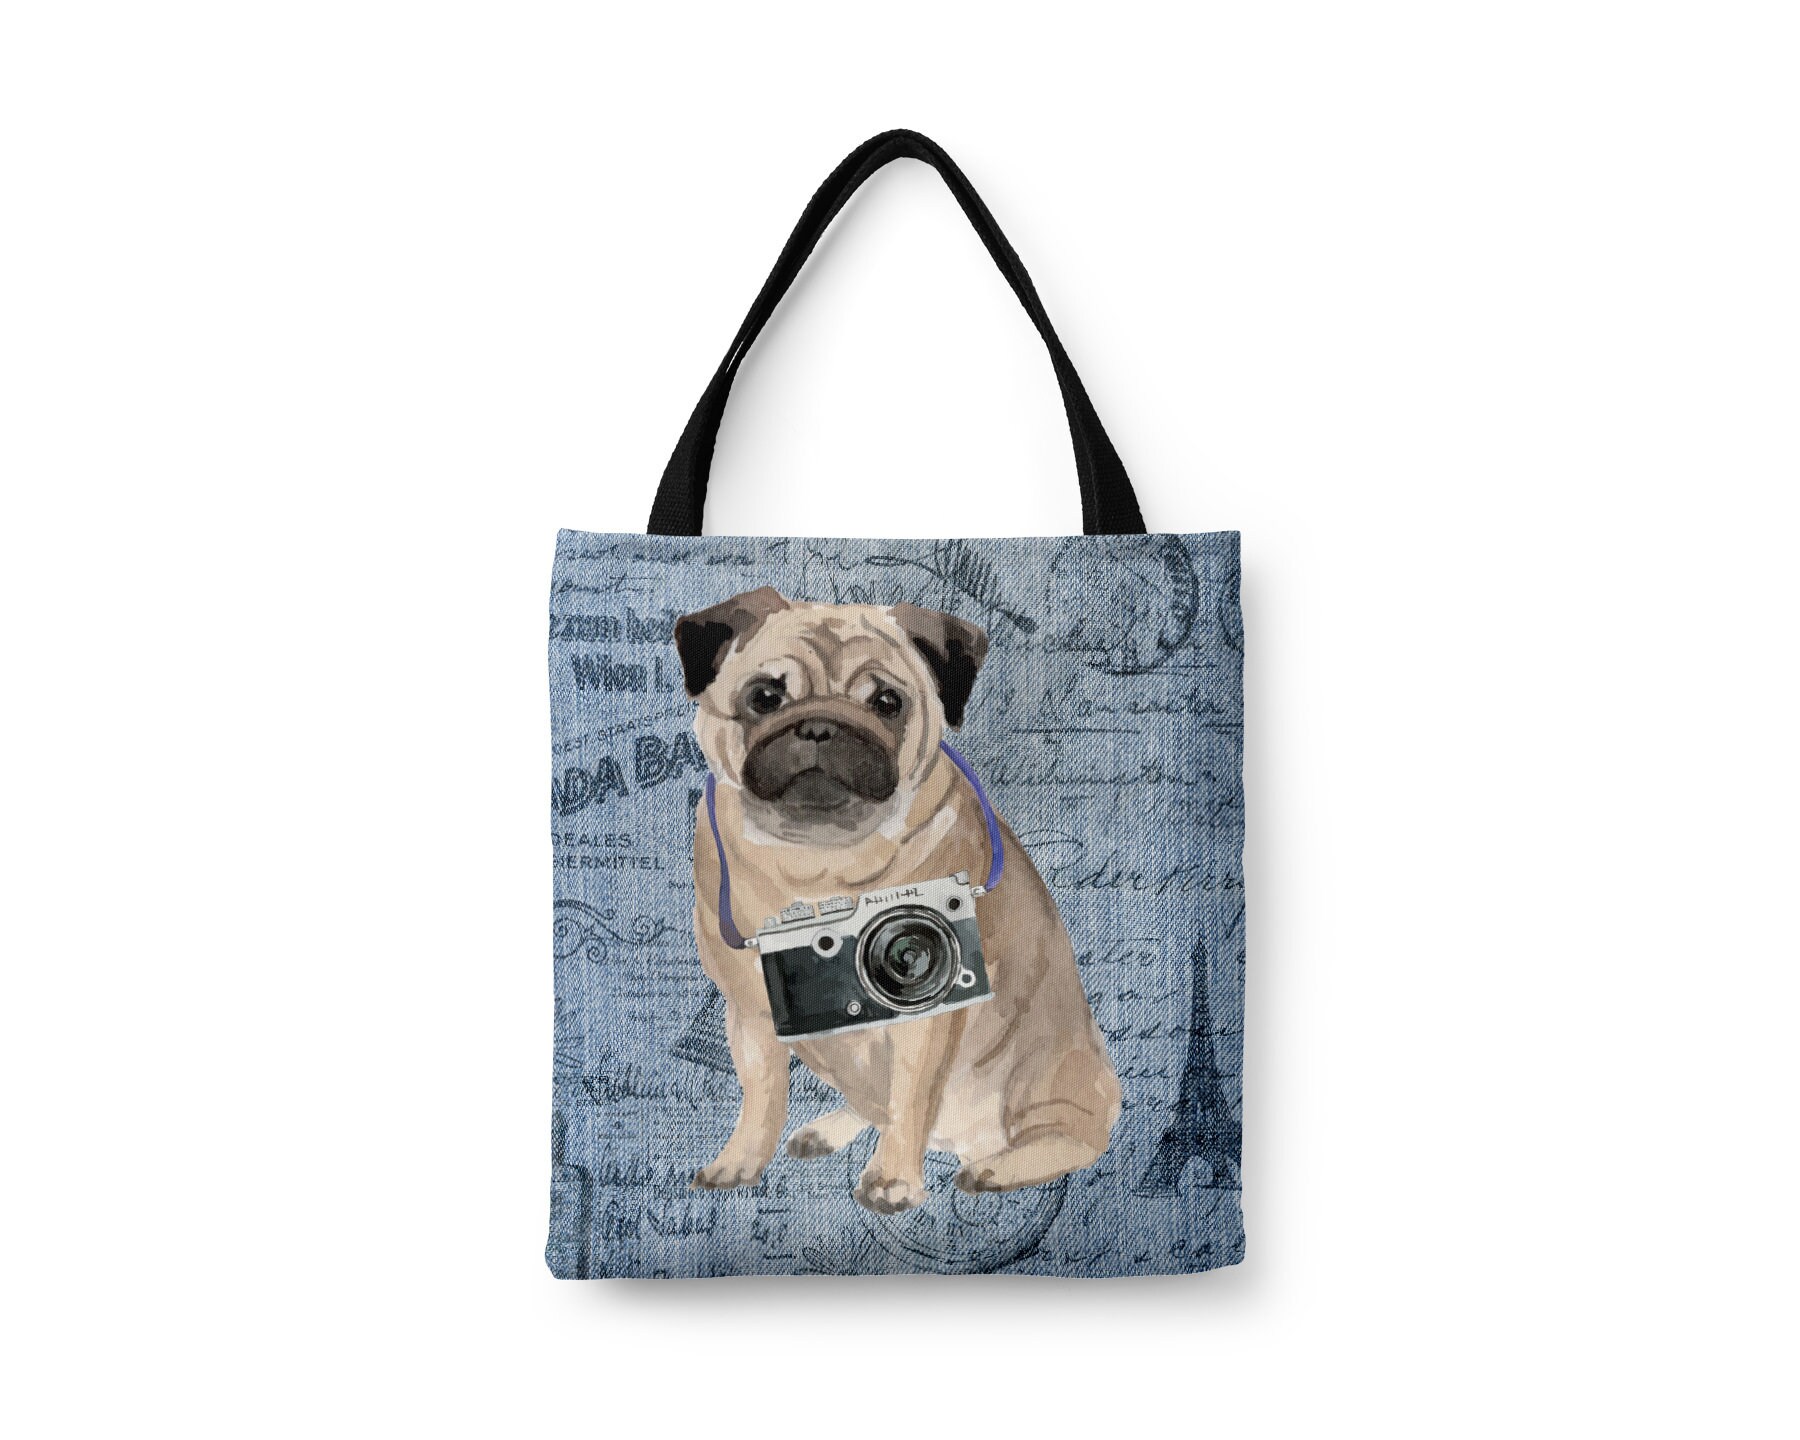 Pug Dog Tote Bag Illustrated Dogs & 6 Denim Inspired Styles. All Purpose Ideal For Shopping. Chinese Pug, Dutch Bulldog, Mini Mastiff